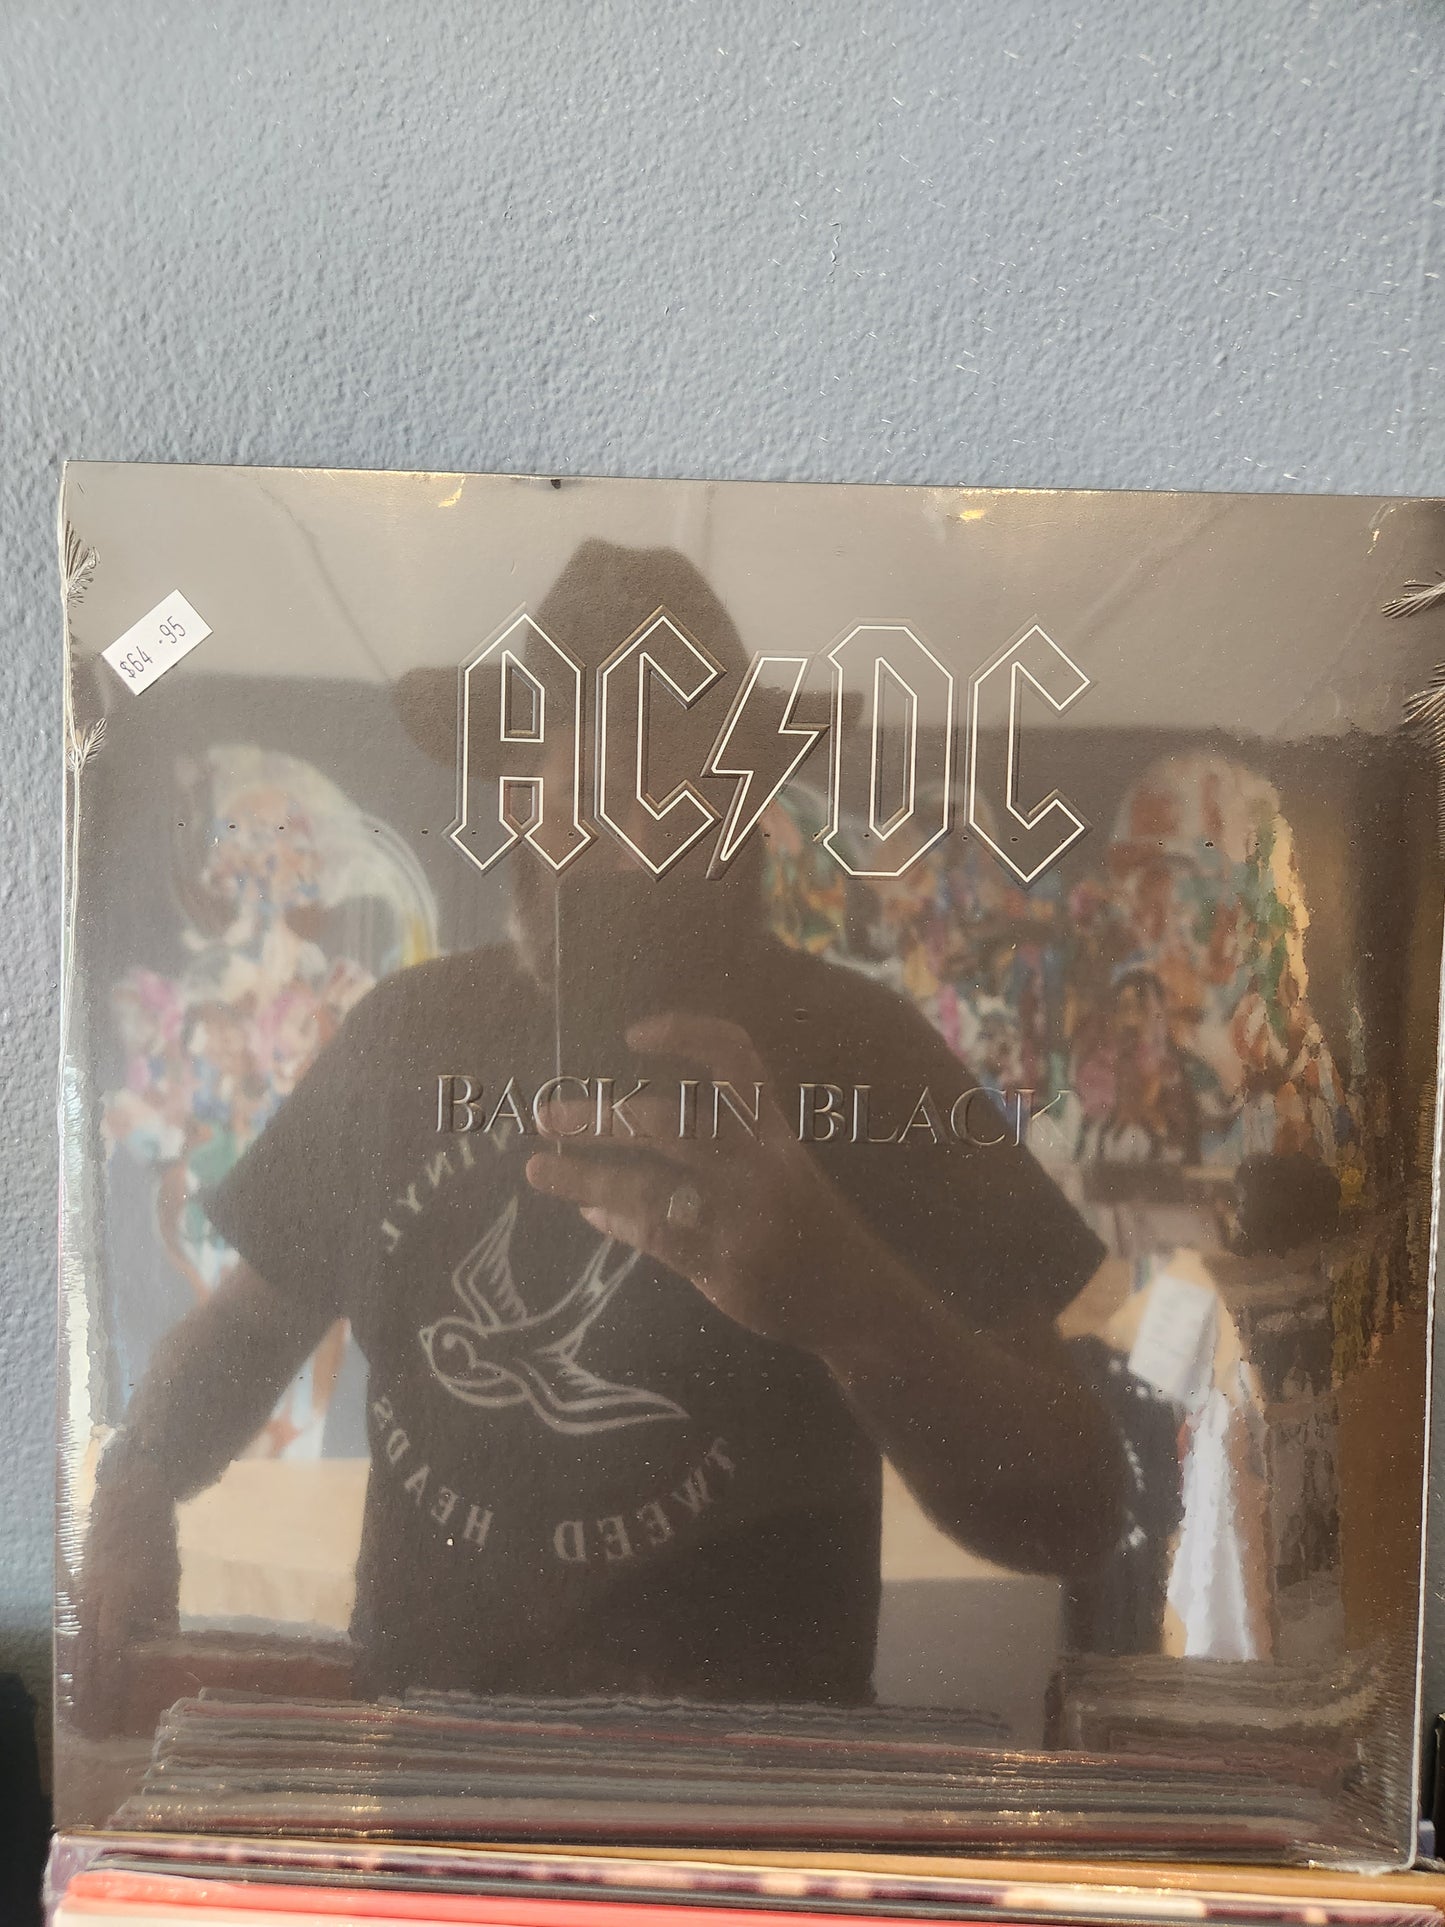 ACDC - Back in Black - Vinyl LP